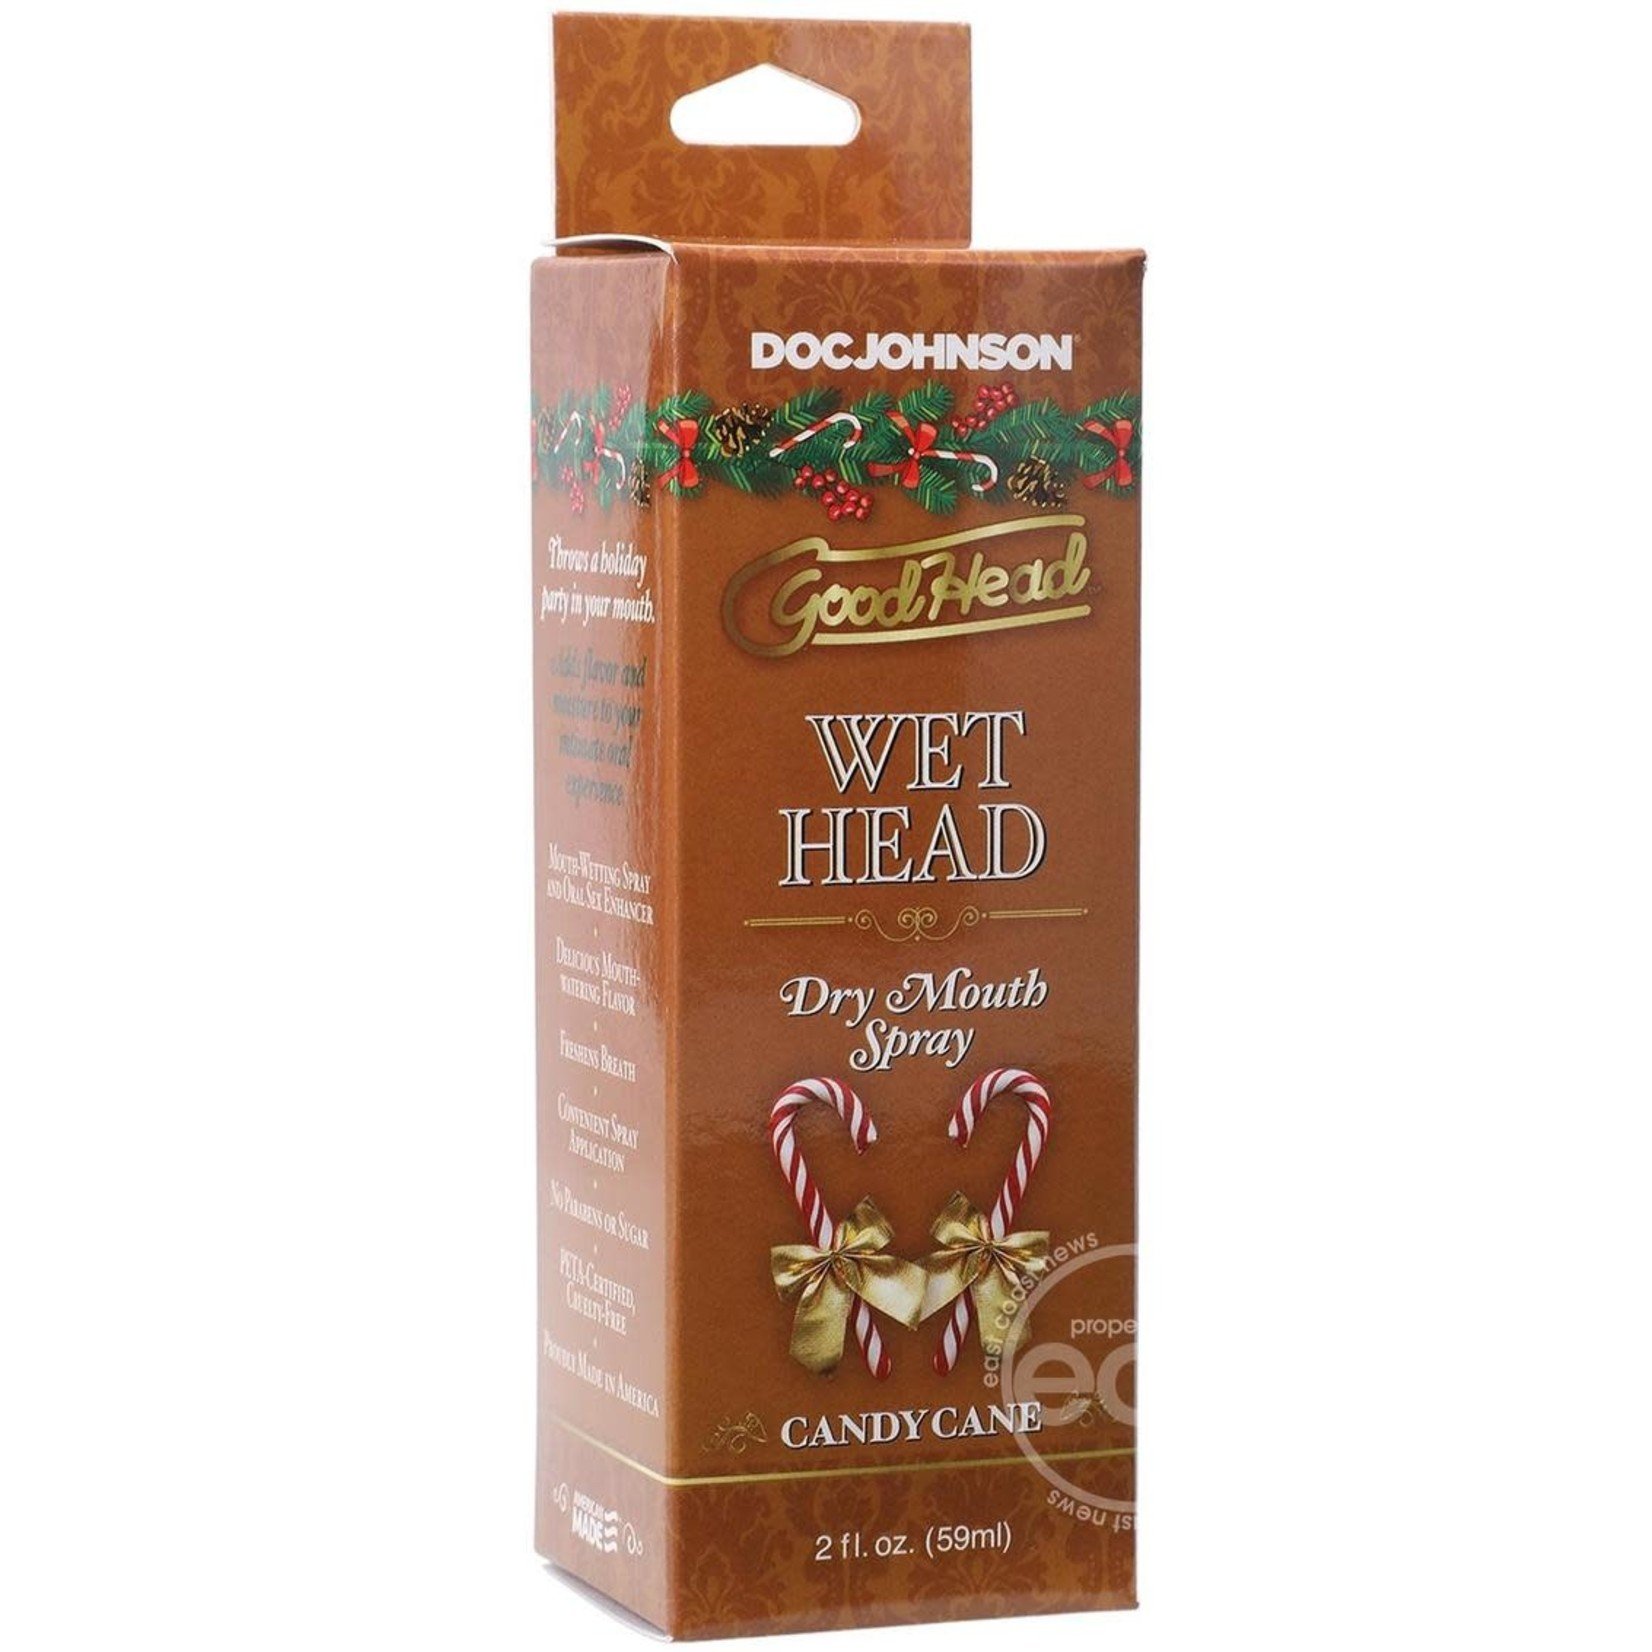 GoodHead Holiday Wet Head Dry Mouth Spray 2oz - Candy Cane